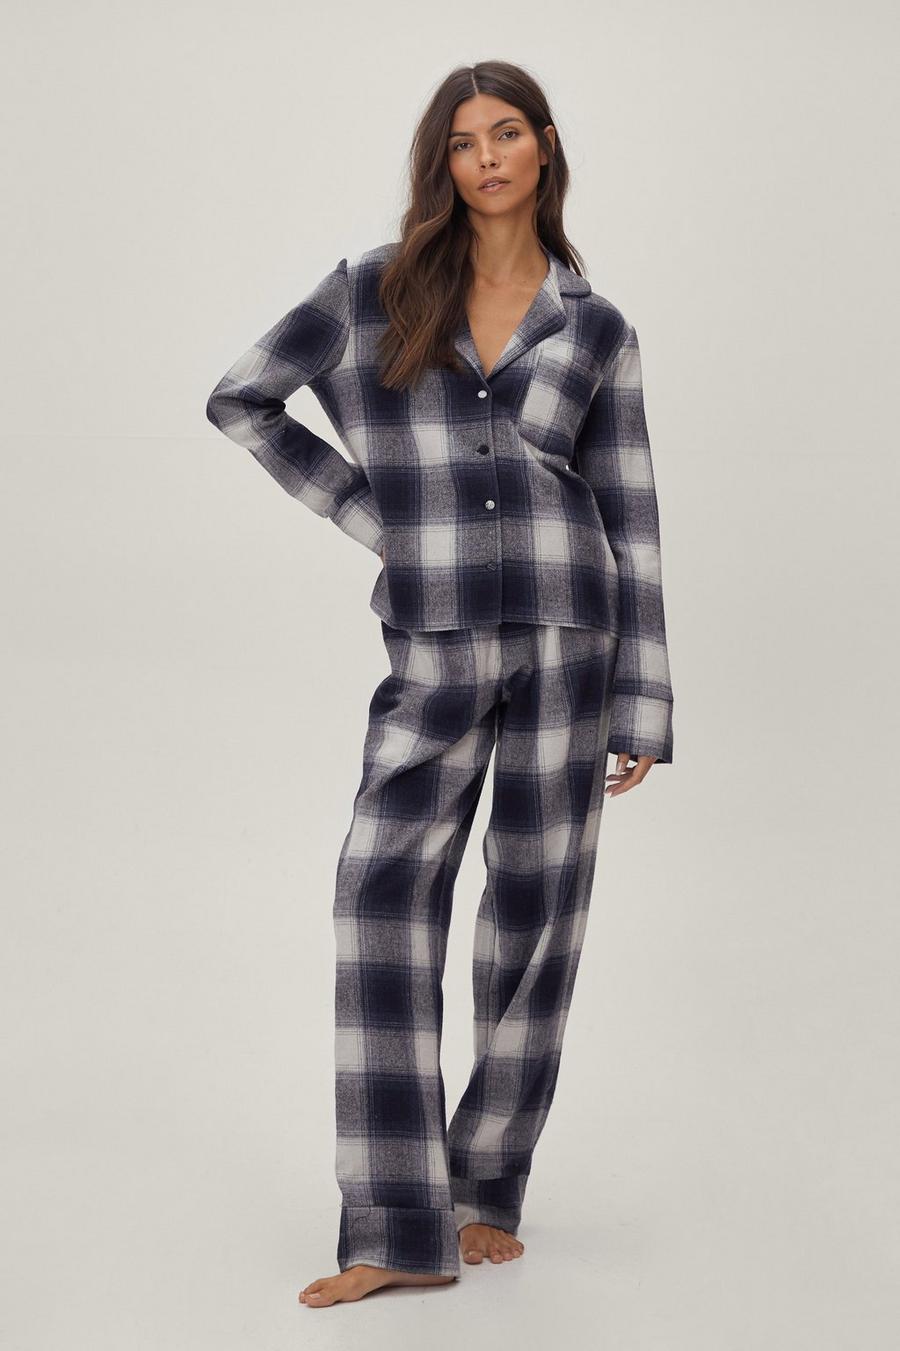 Kleding Dameskleding Pyjamas & Badjassen Pyjamashorts & Pyjamabroeken Broek silk pyjama pants/   Pajama pants with piping all natural real silk satin 